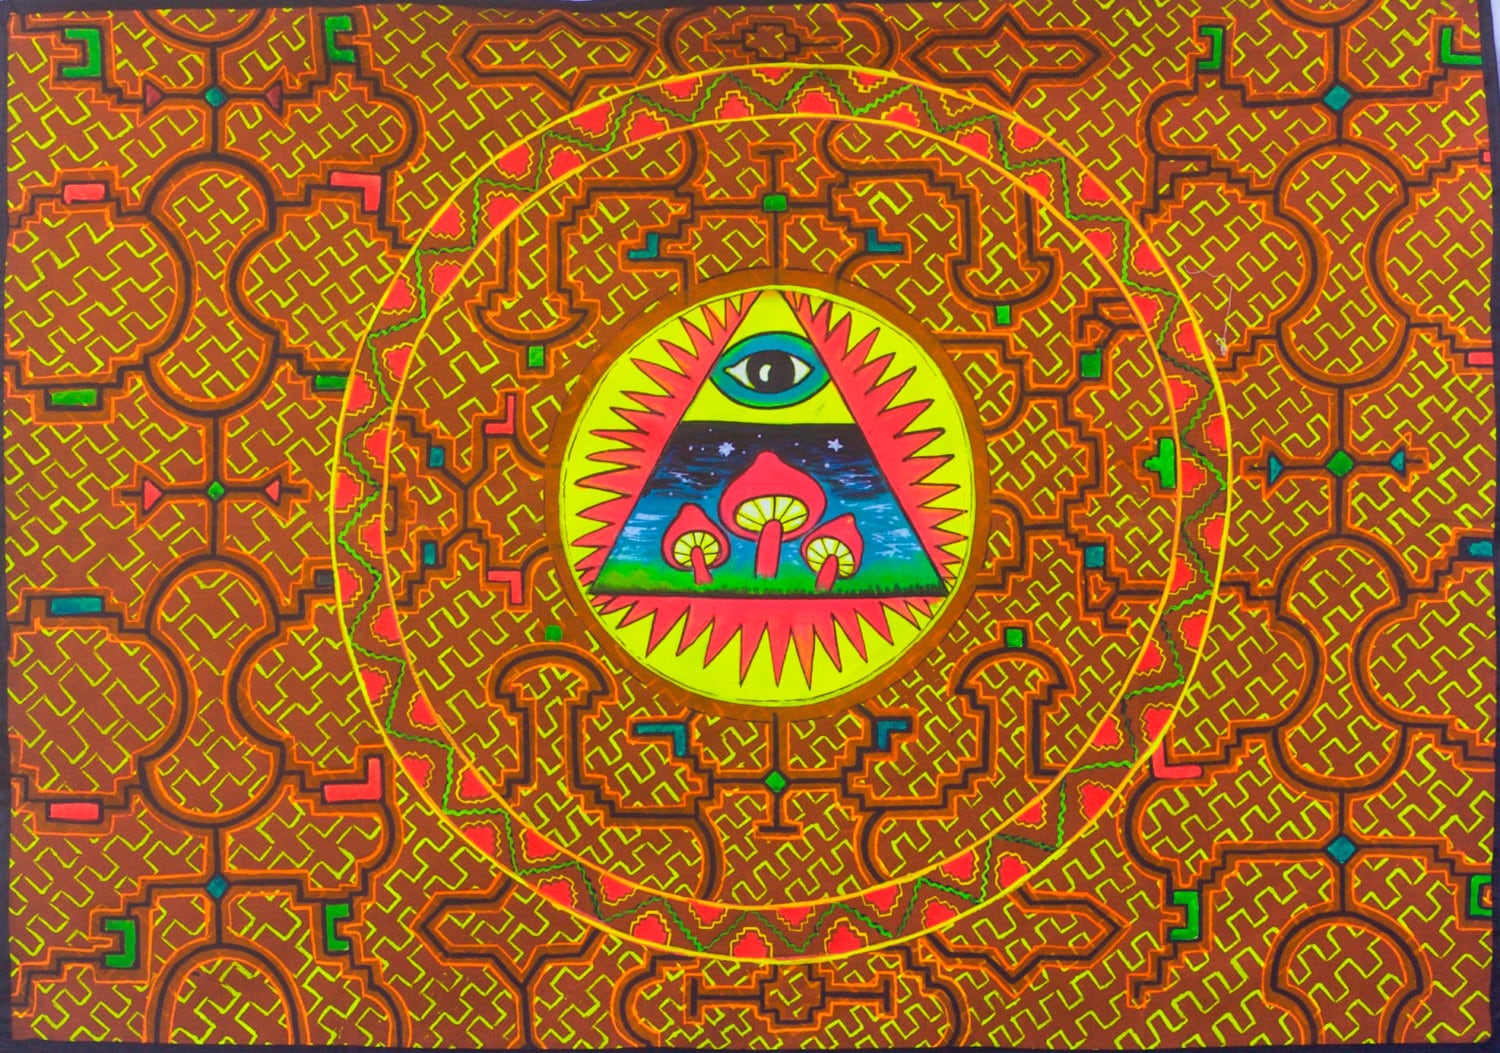 Magic Illuminati Shroom Painting - 90x60cm - handmade on order - fully blacklight glowing colors - psychedelic psilocybin visionary artwork